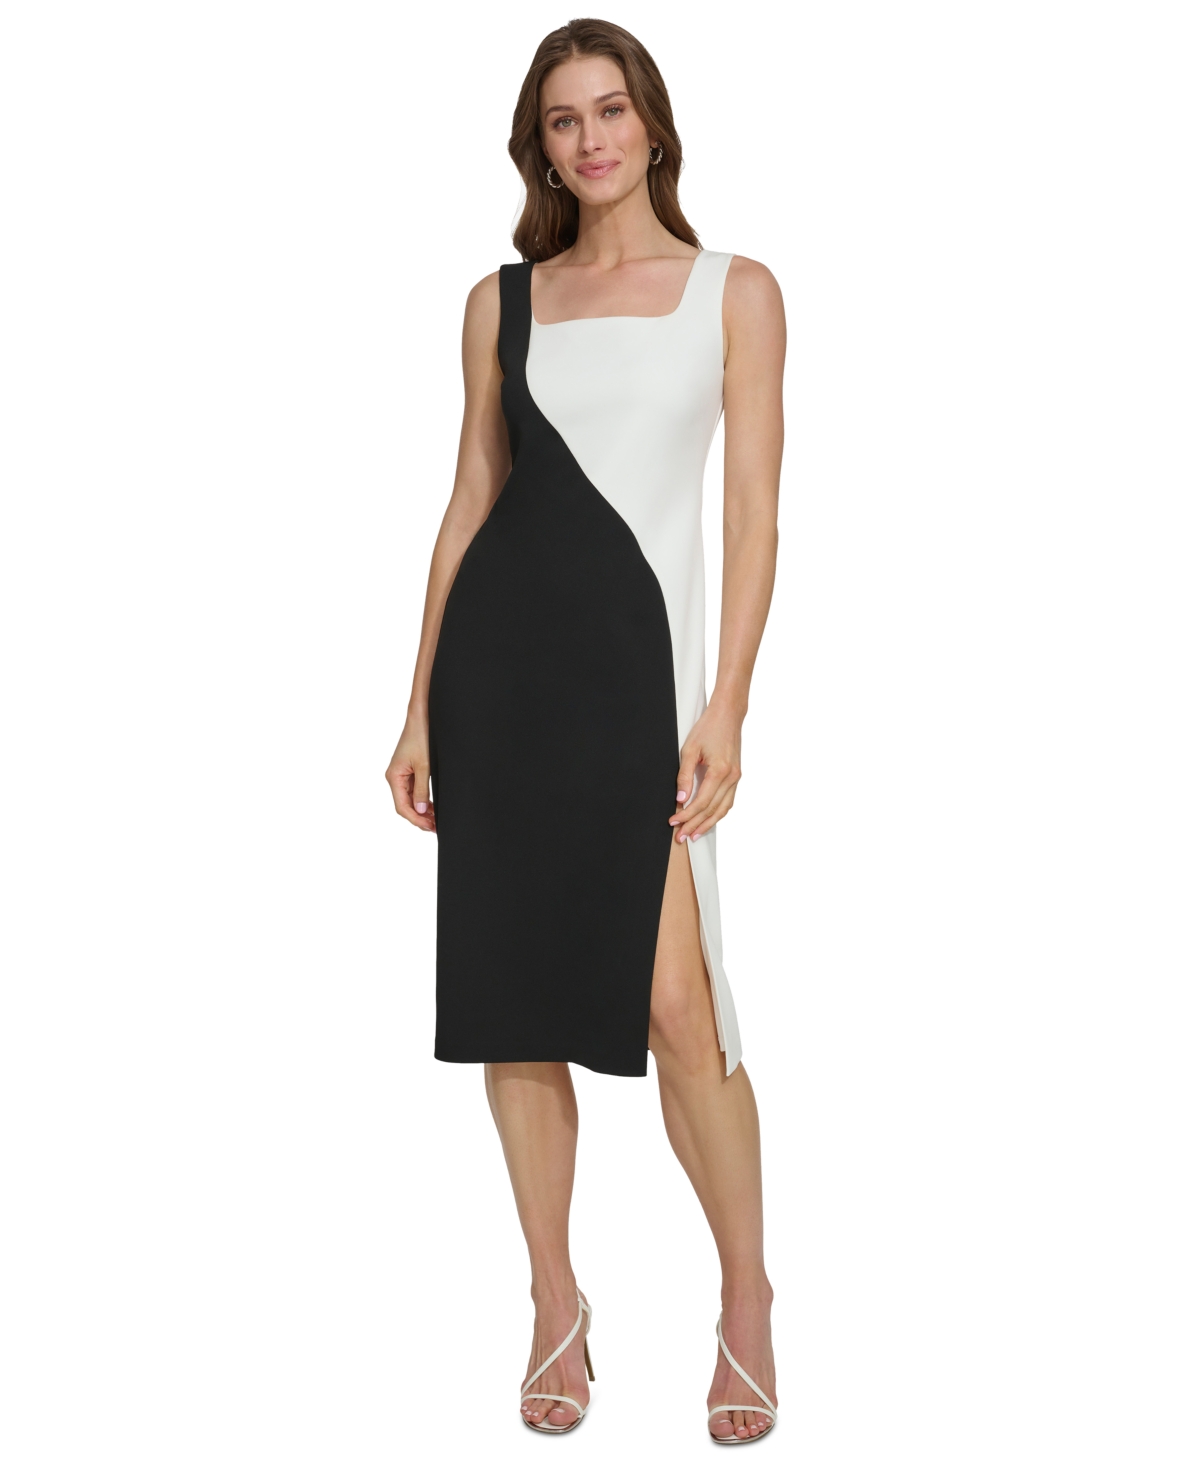 Women's Sleeveless Colorblocked Sheath Dress - Black/Cream